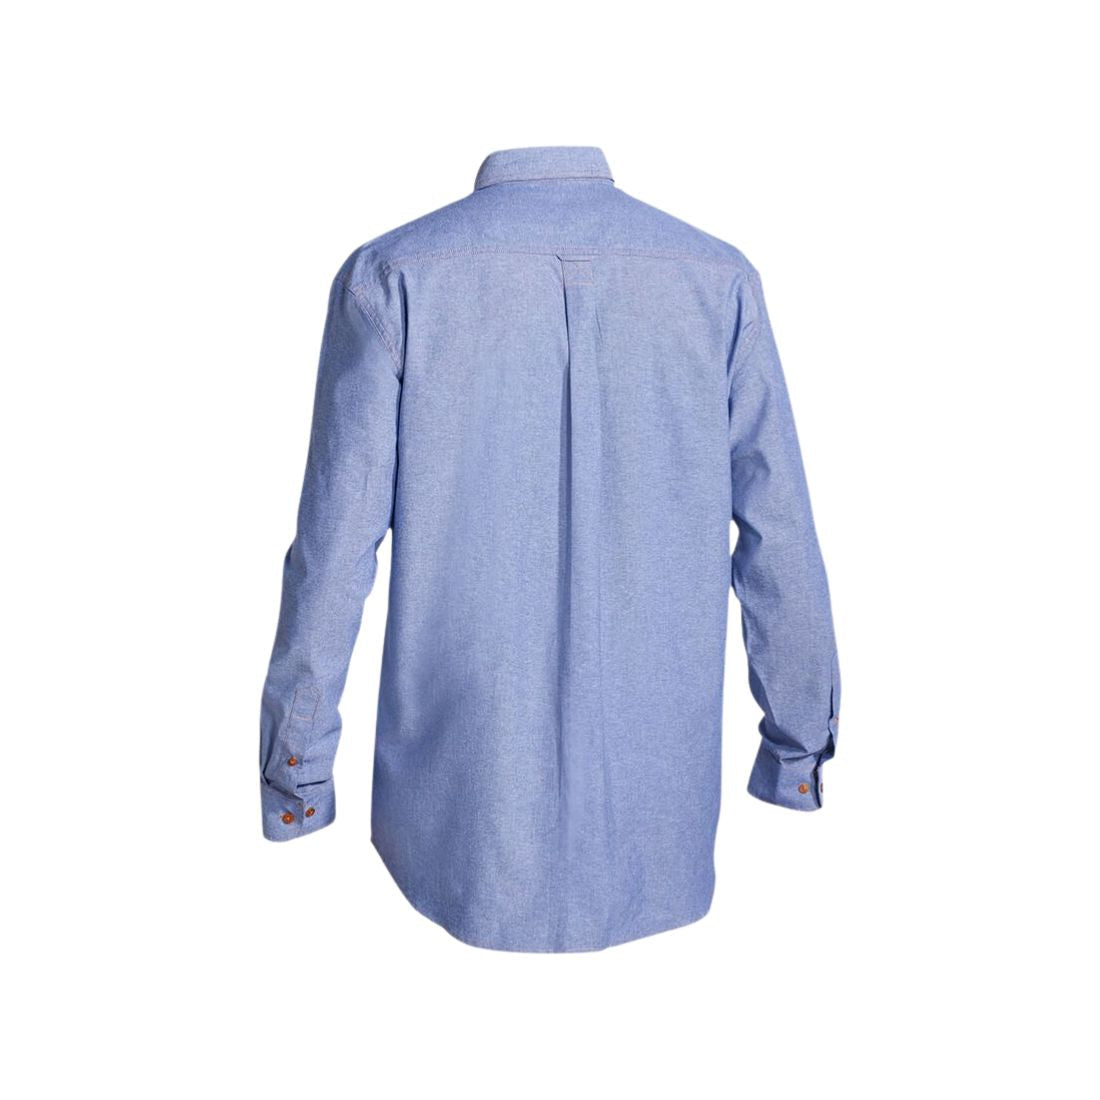 Chambray Shirt - Long Sleeve Blue Workwear by Bisley | The Bloke Shop